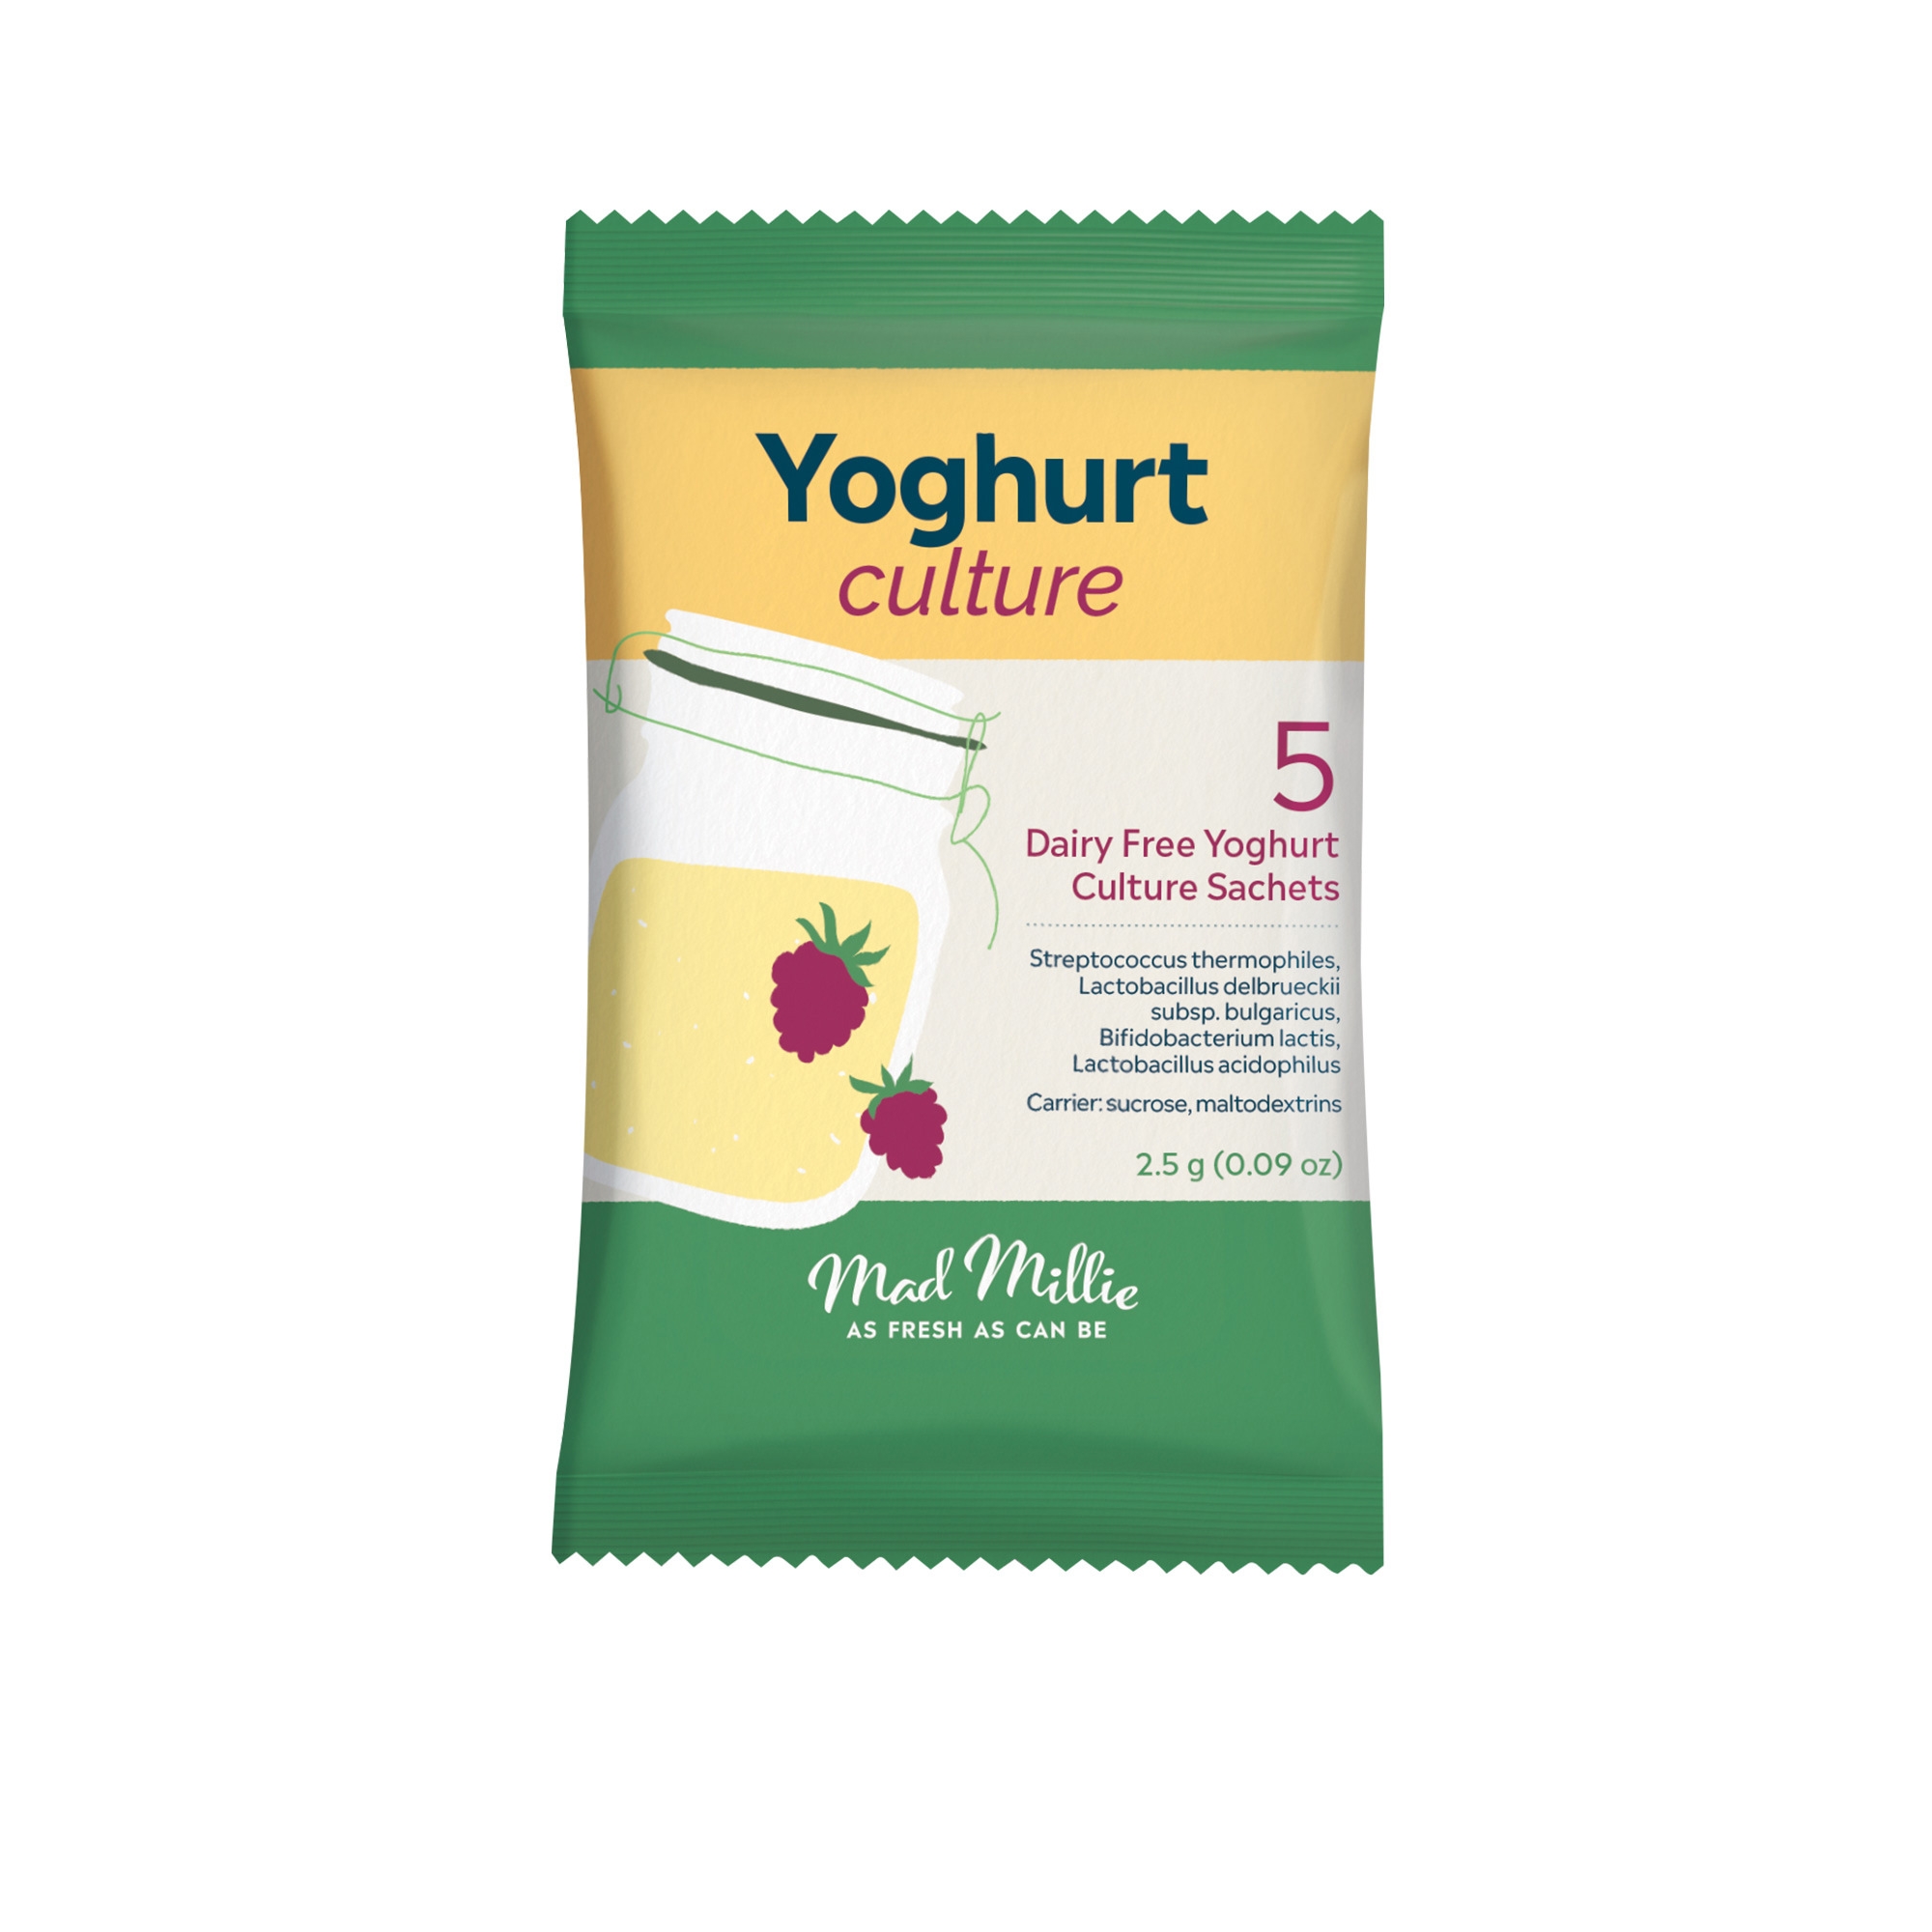 Mad Millie Probiotic Yoghurt Cultures Sachet Dairy Free Image 1